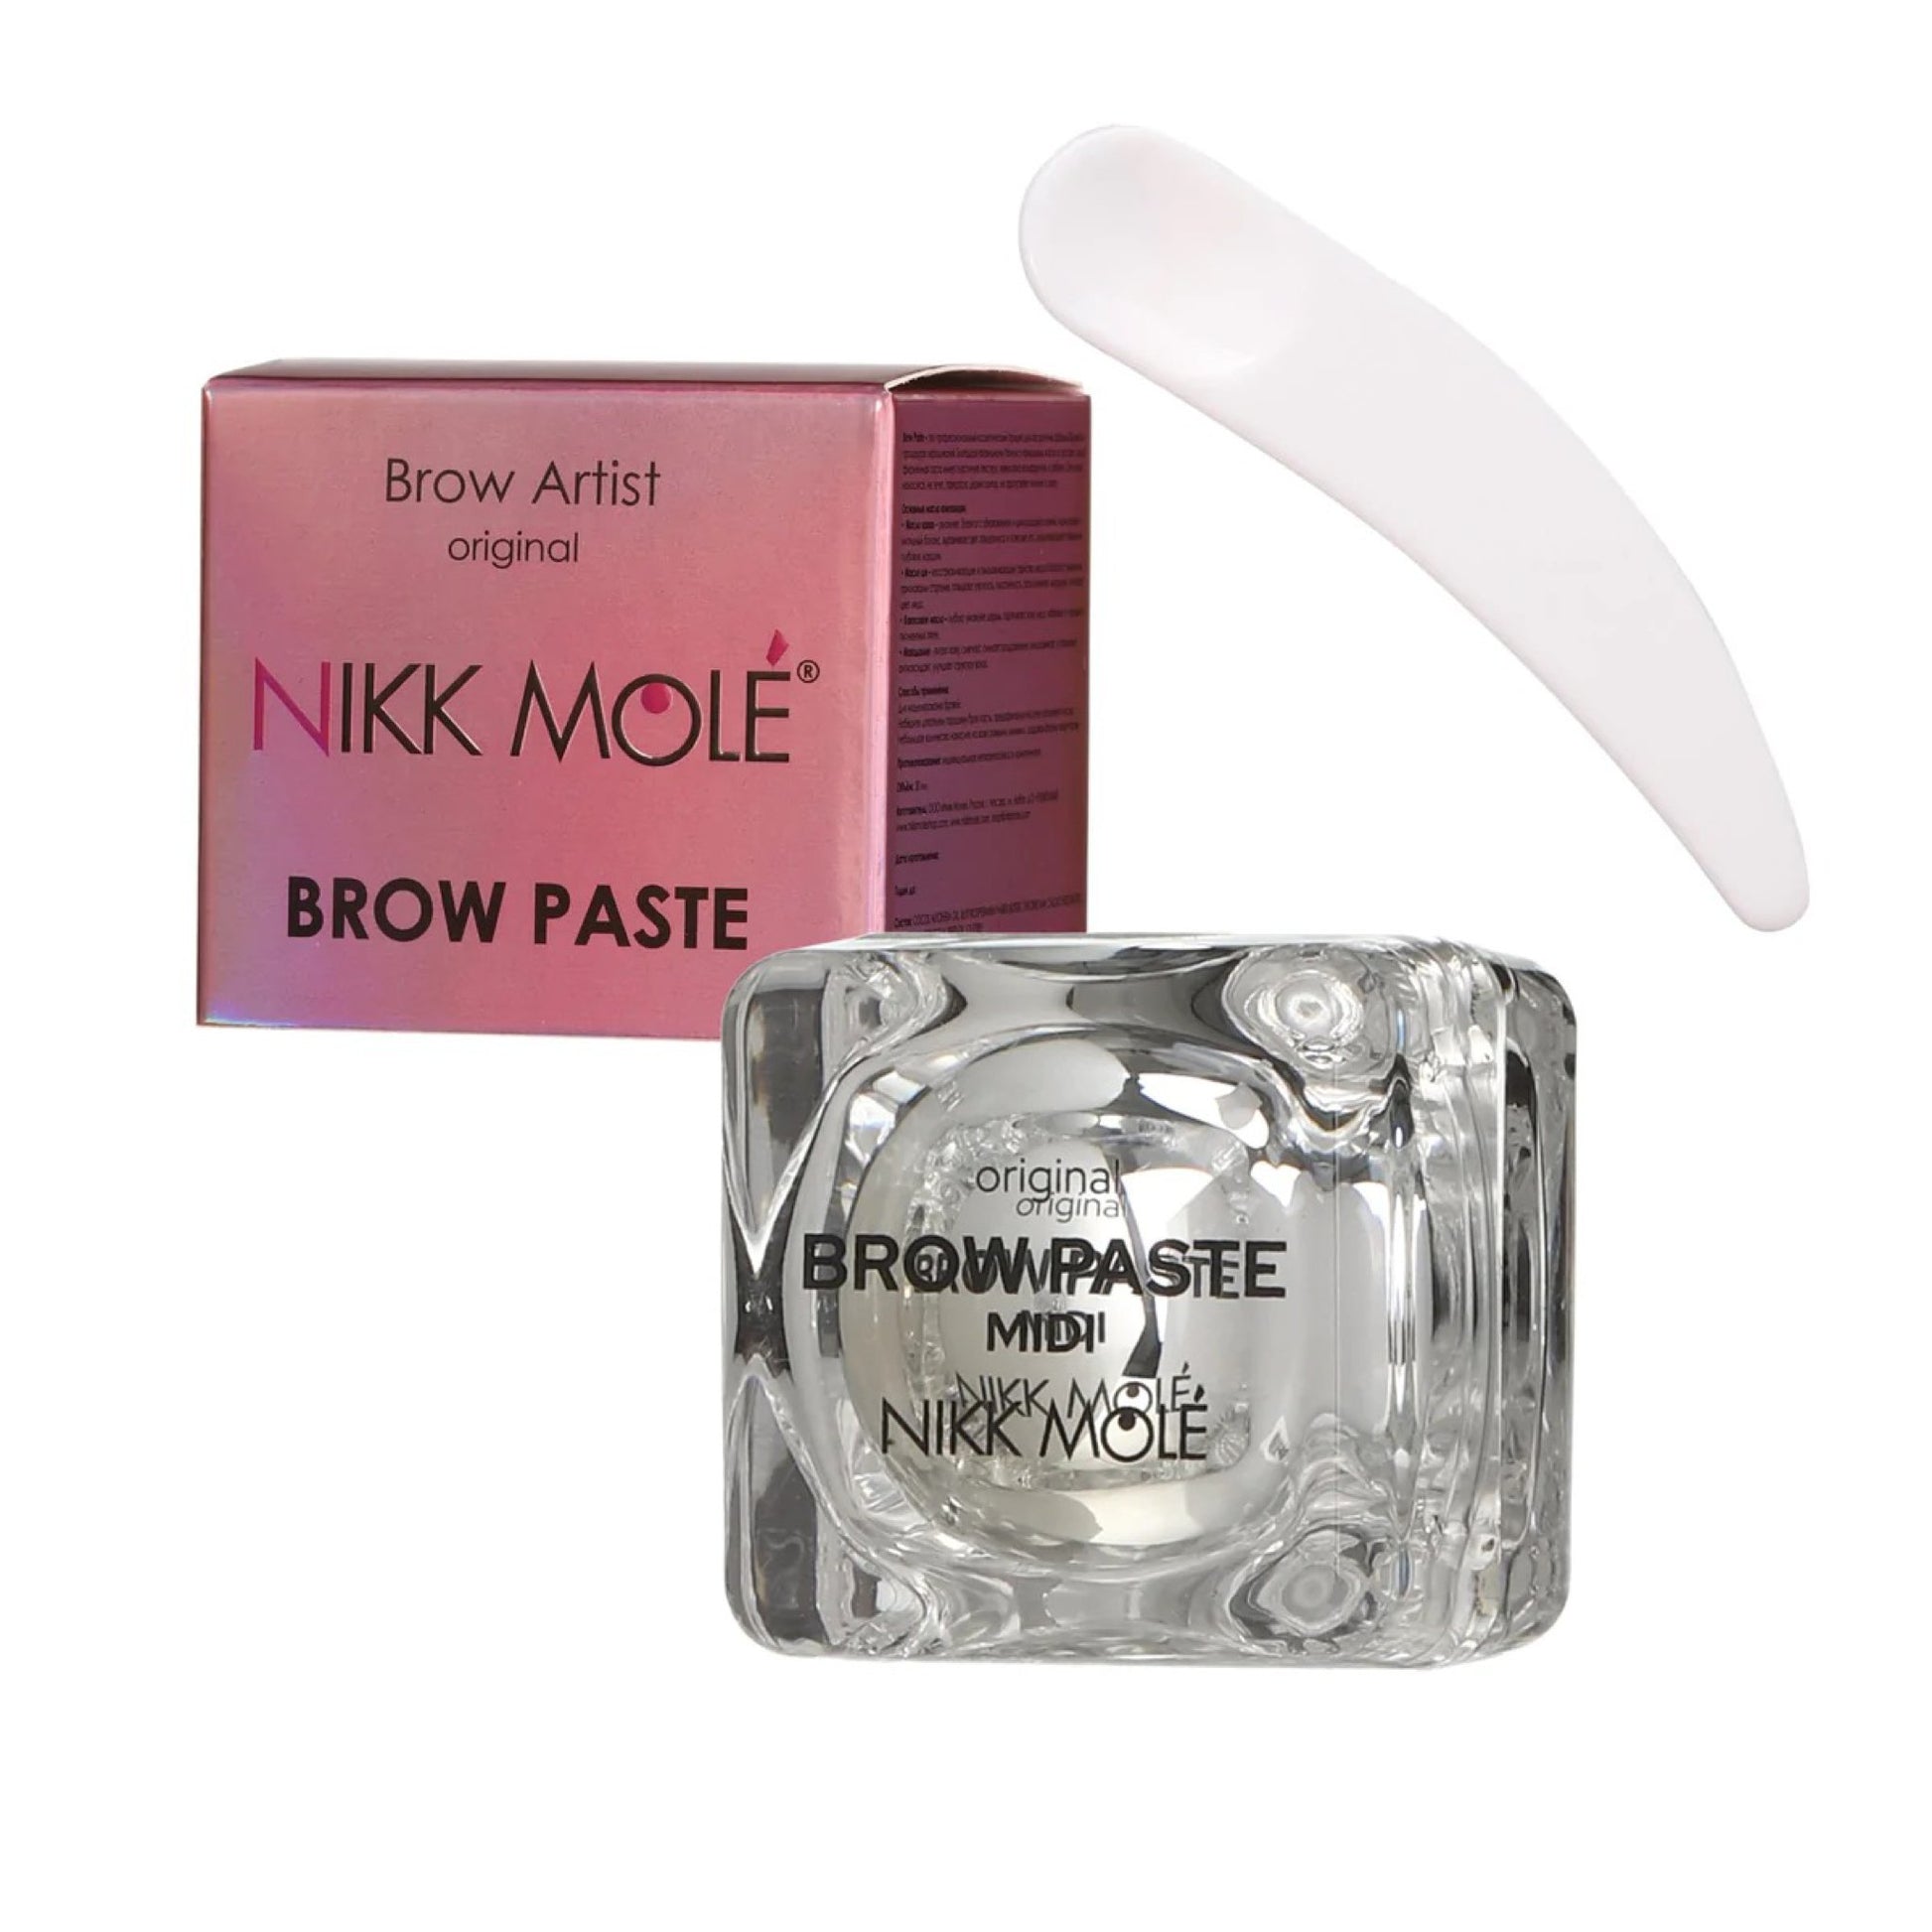 NIKK MOLE - Brow Paste Original White (2 Sizes Available) - Cosmetica Pro Store